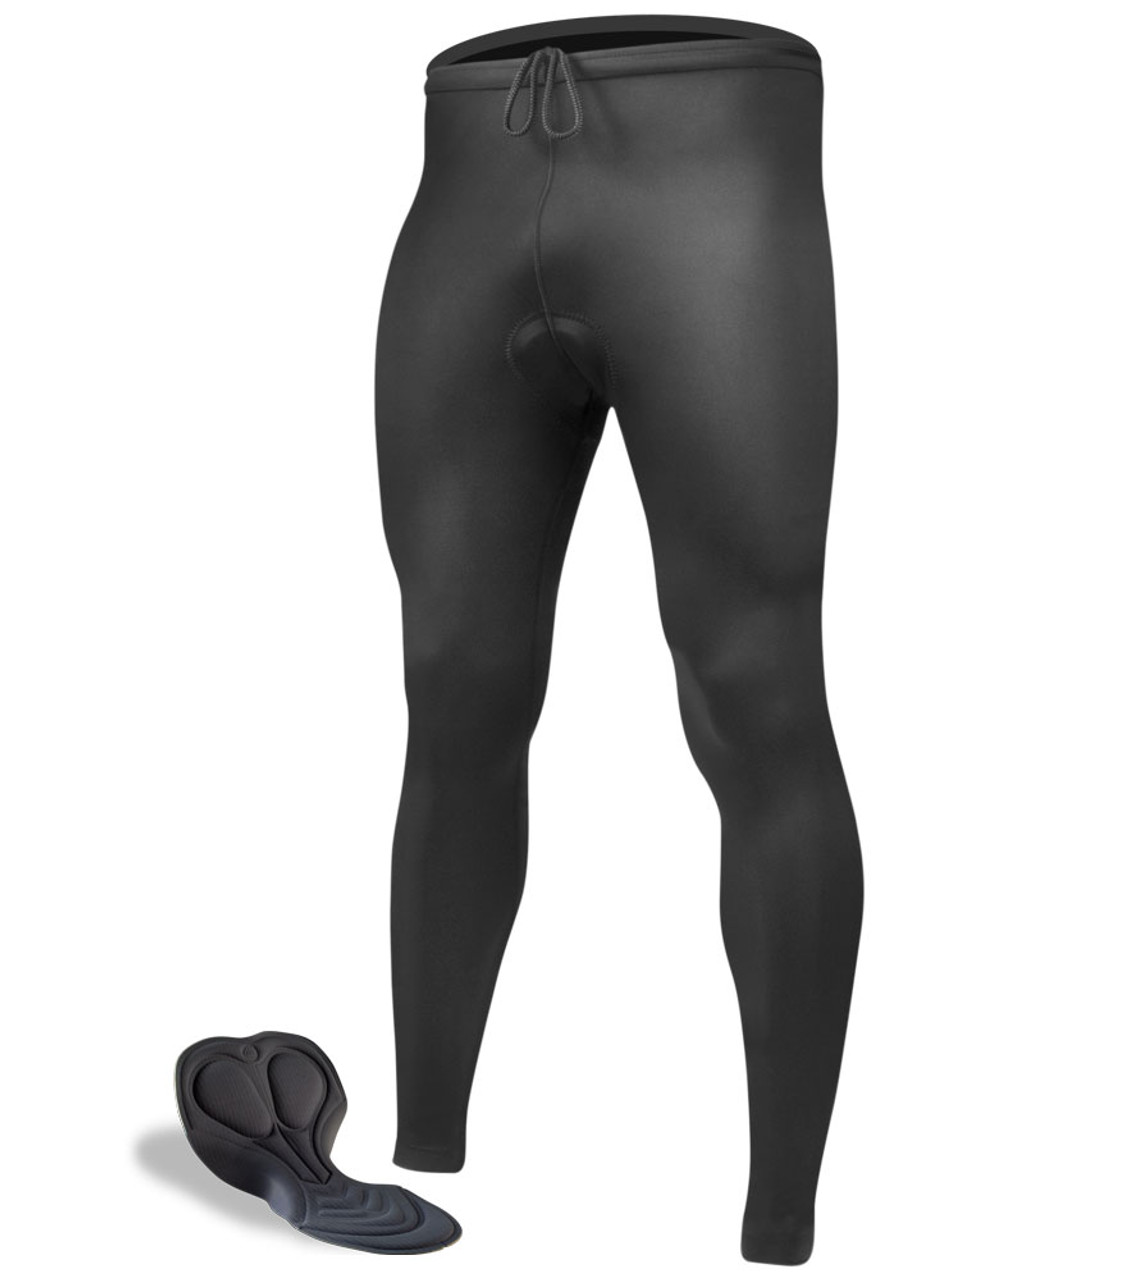 Thermal Sports Tights - Black/dark gray - Men